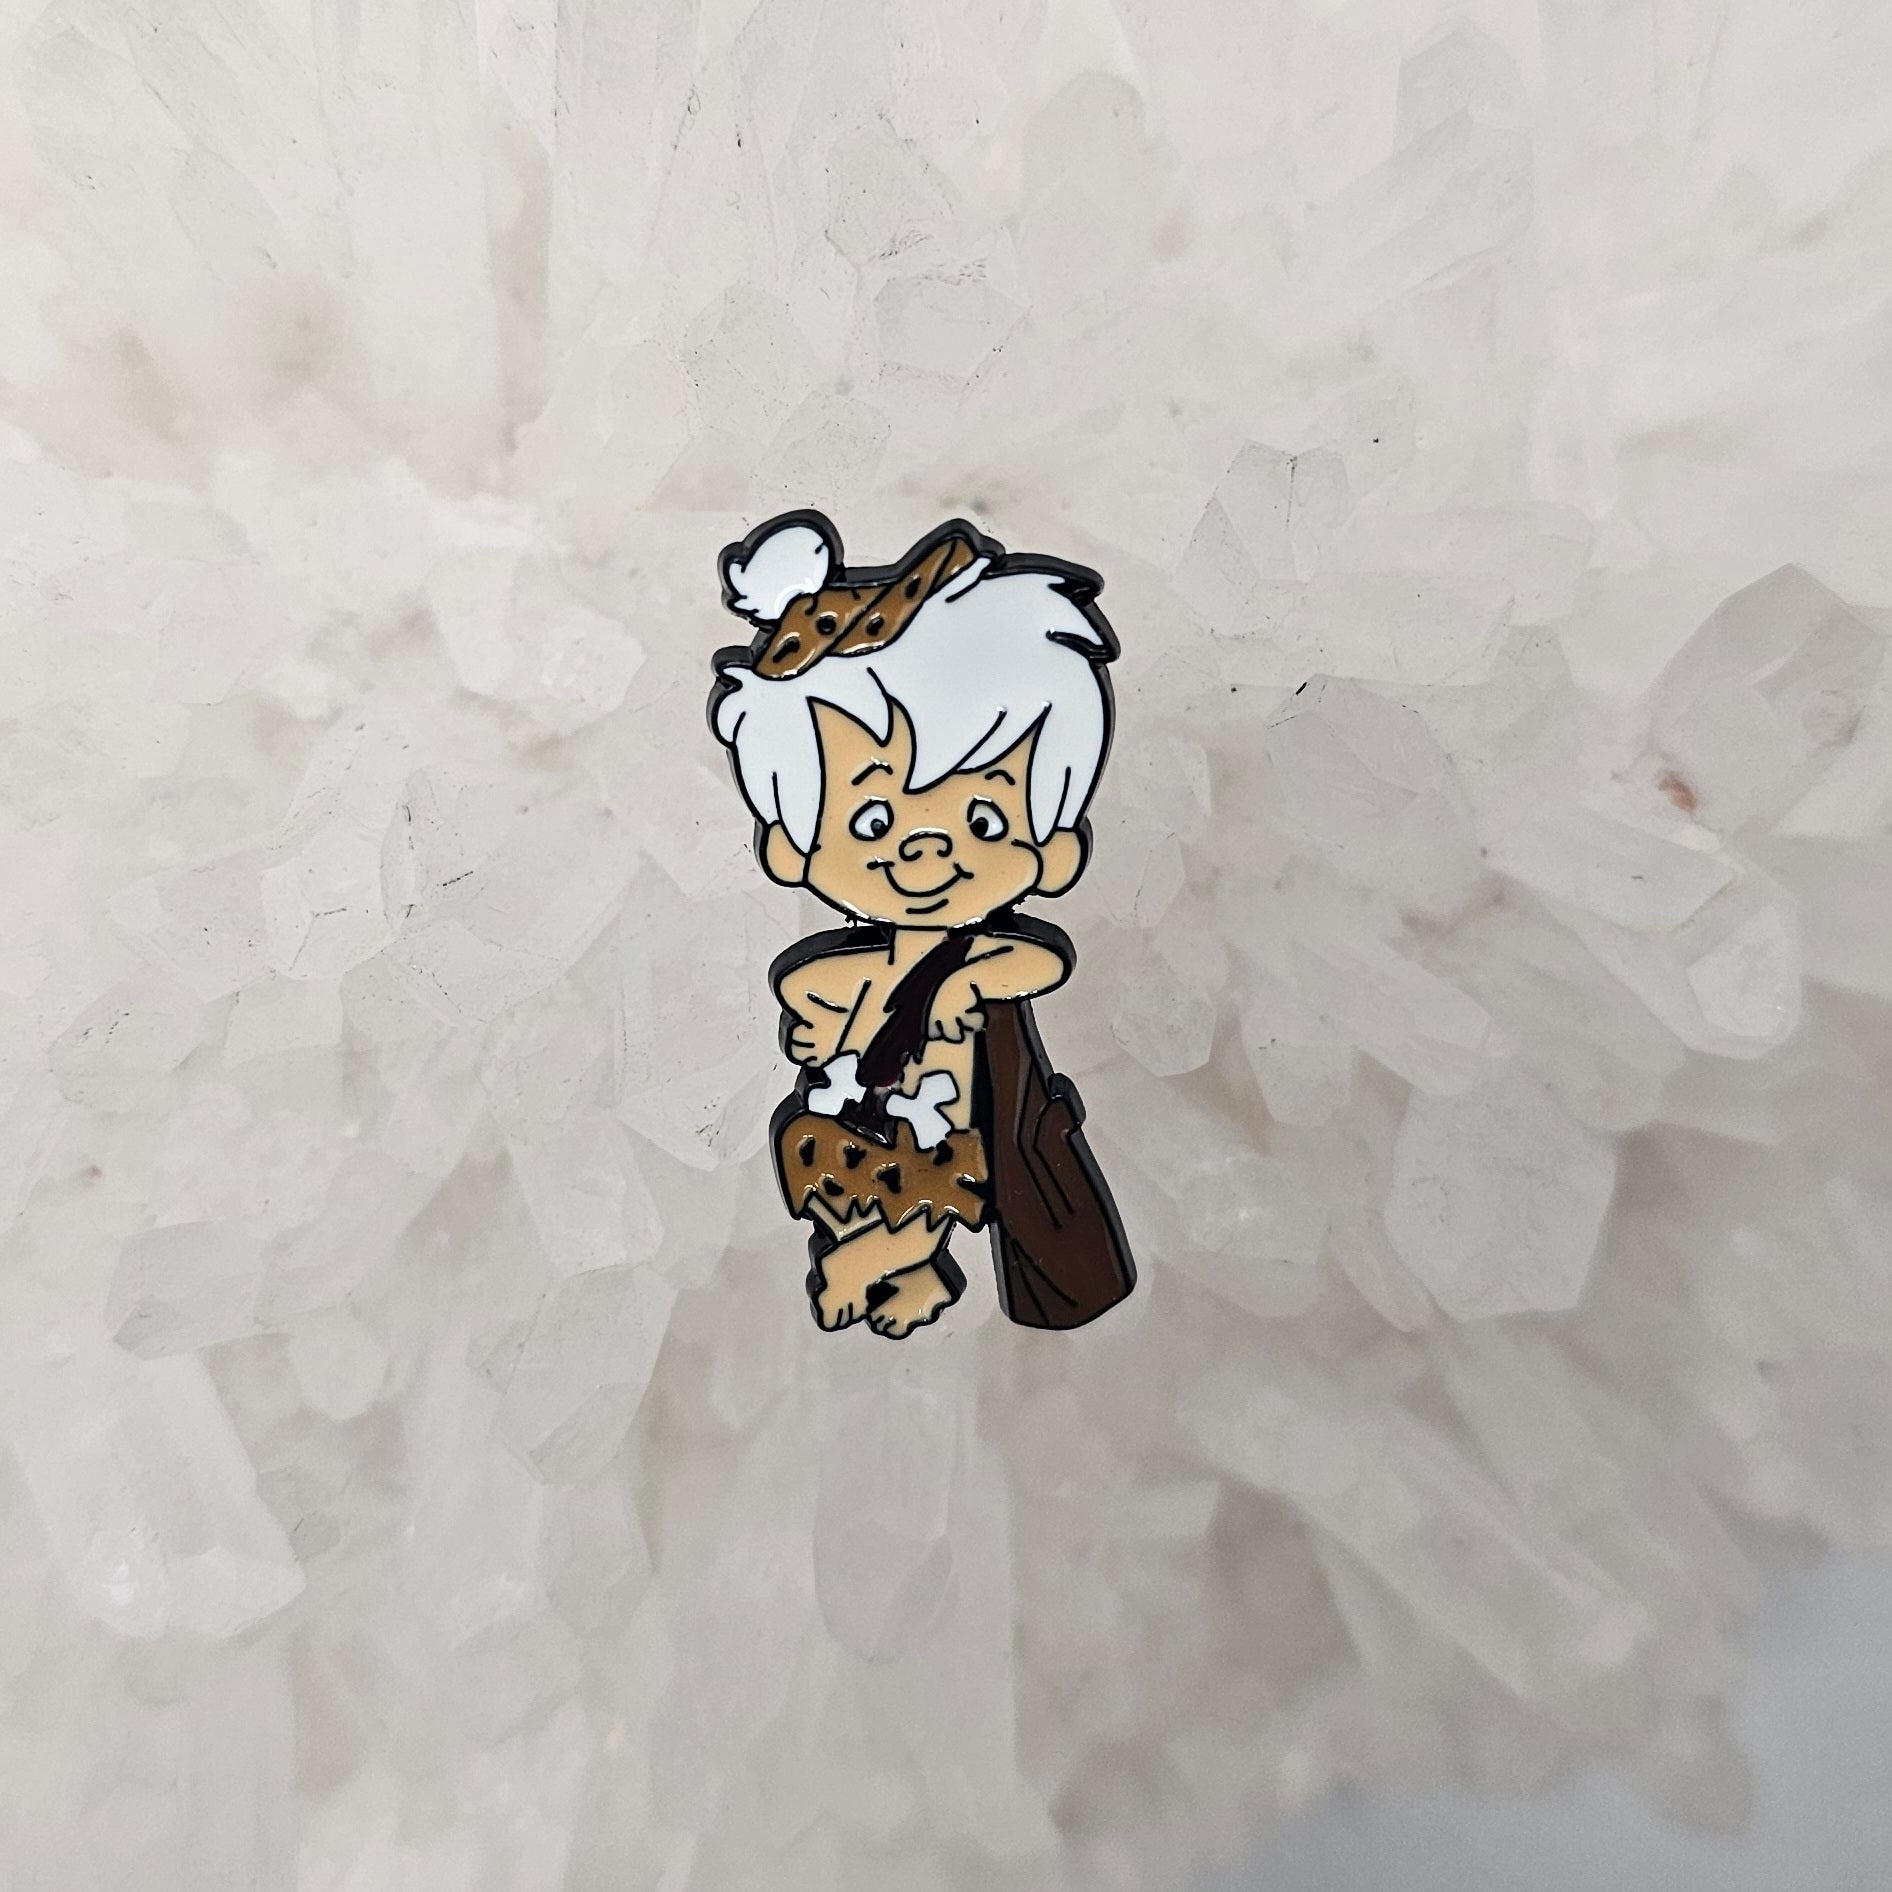 Bam Bam Flintstones Kid Classic Cartoon Enamel Pins Hat Pins Lapel Pin Brooch Badge Festival Pin